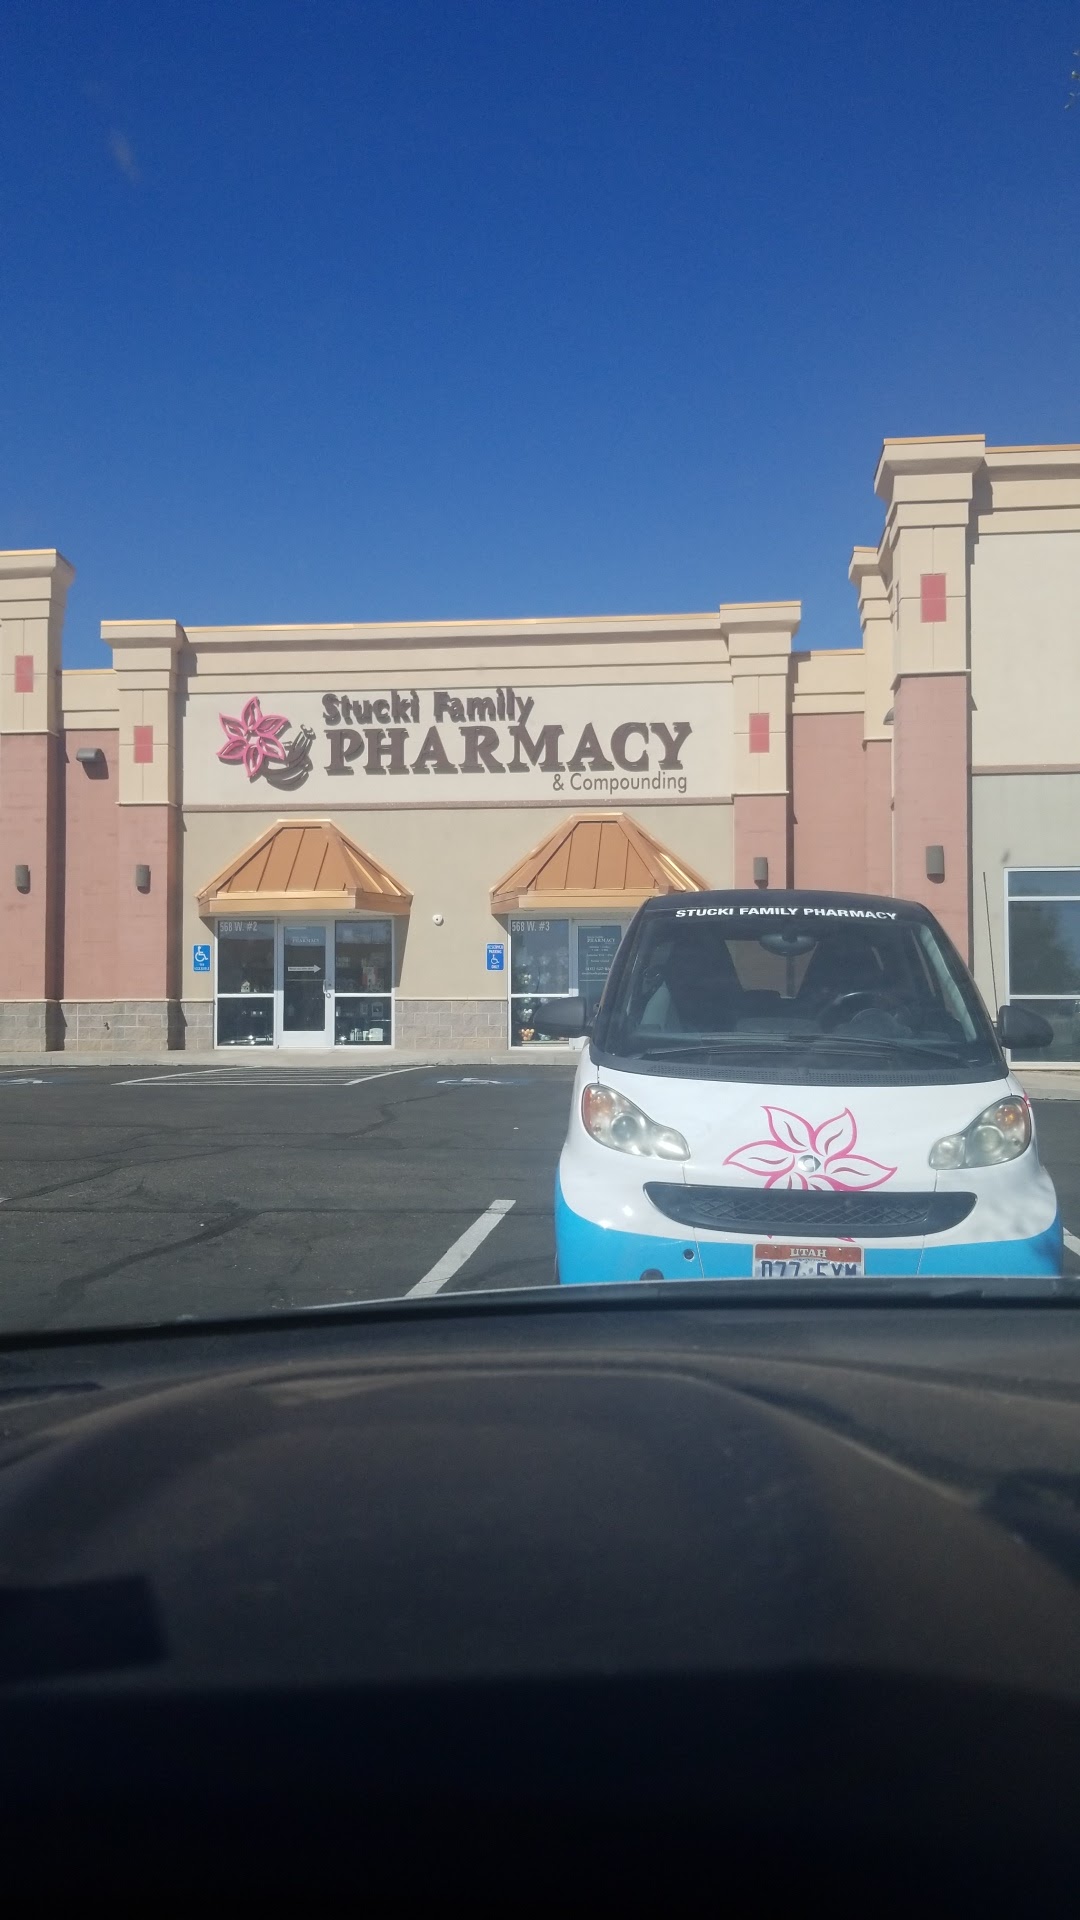 Stucki Family Pharmacy